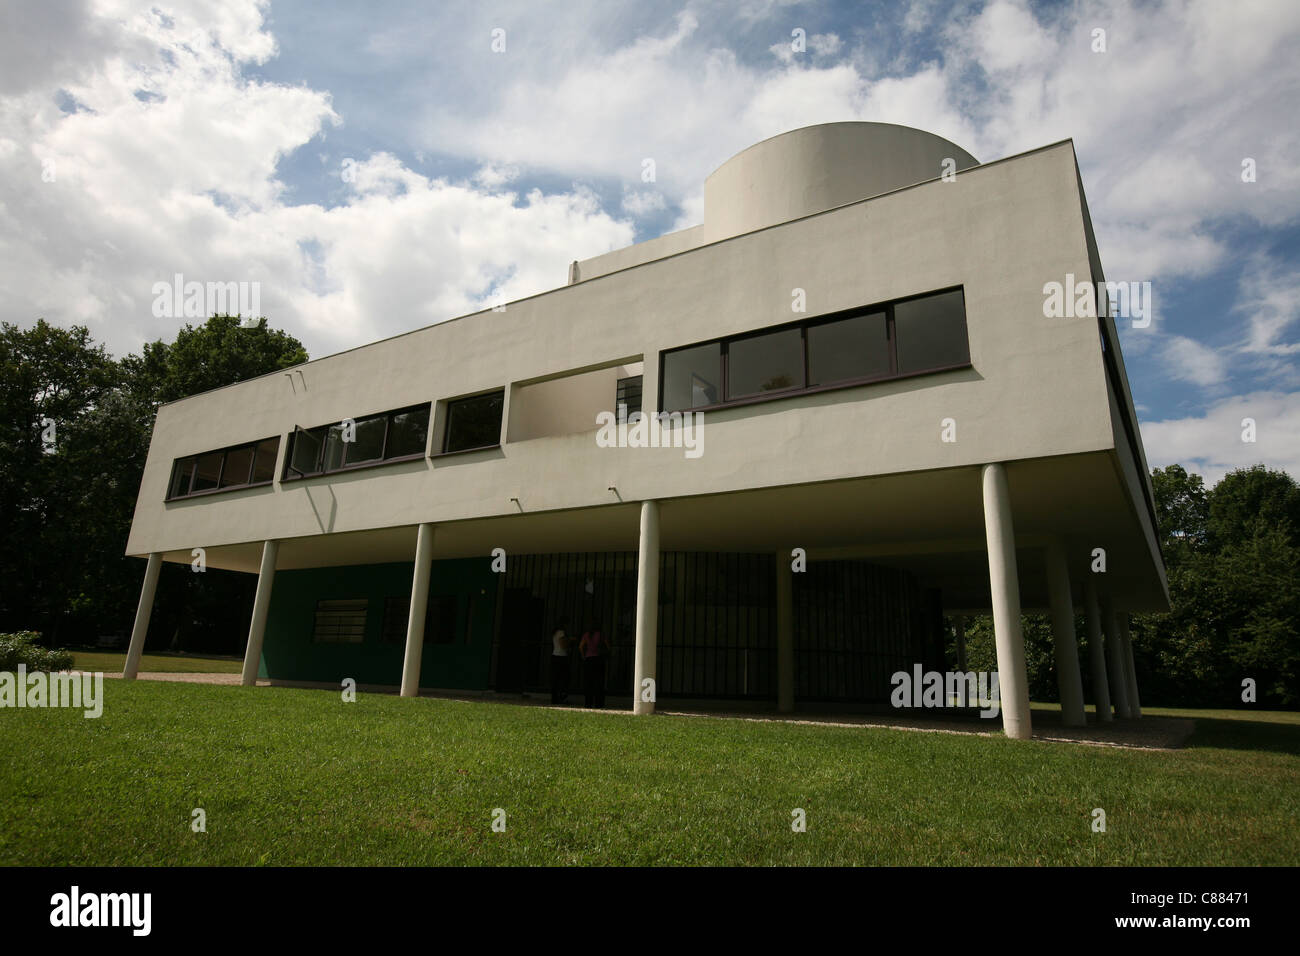 Villa Savoye by architect Le Corbusier in Poissy near Paris, France. Stock Photo